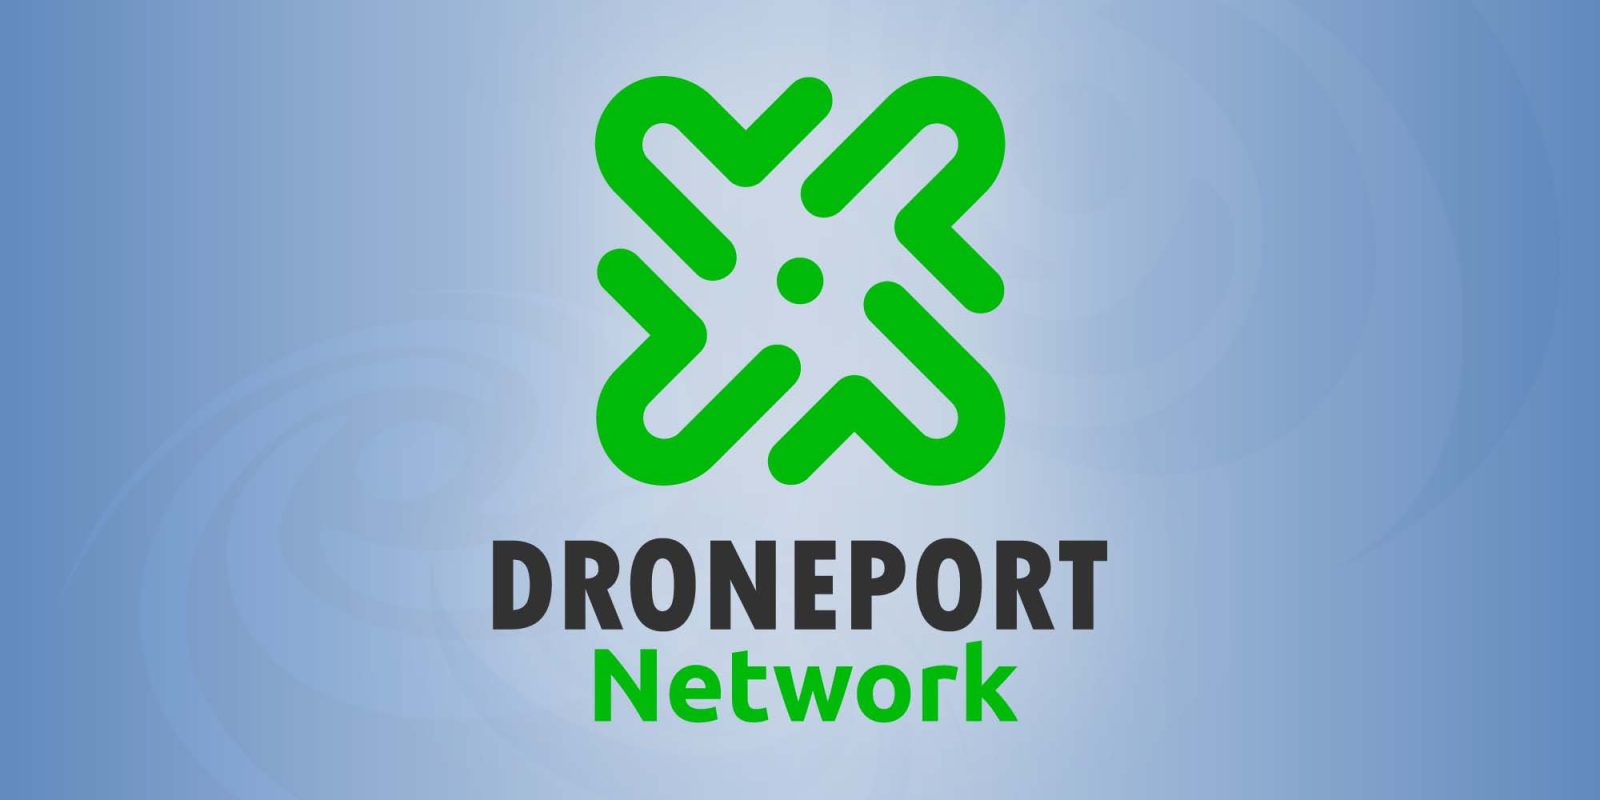 DronePort Network Tulsa